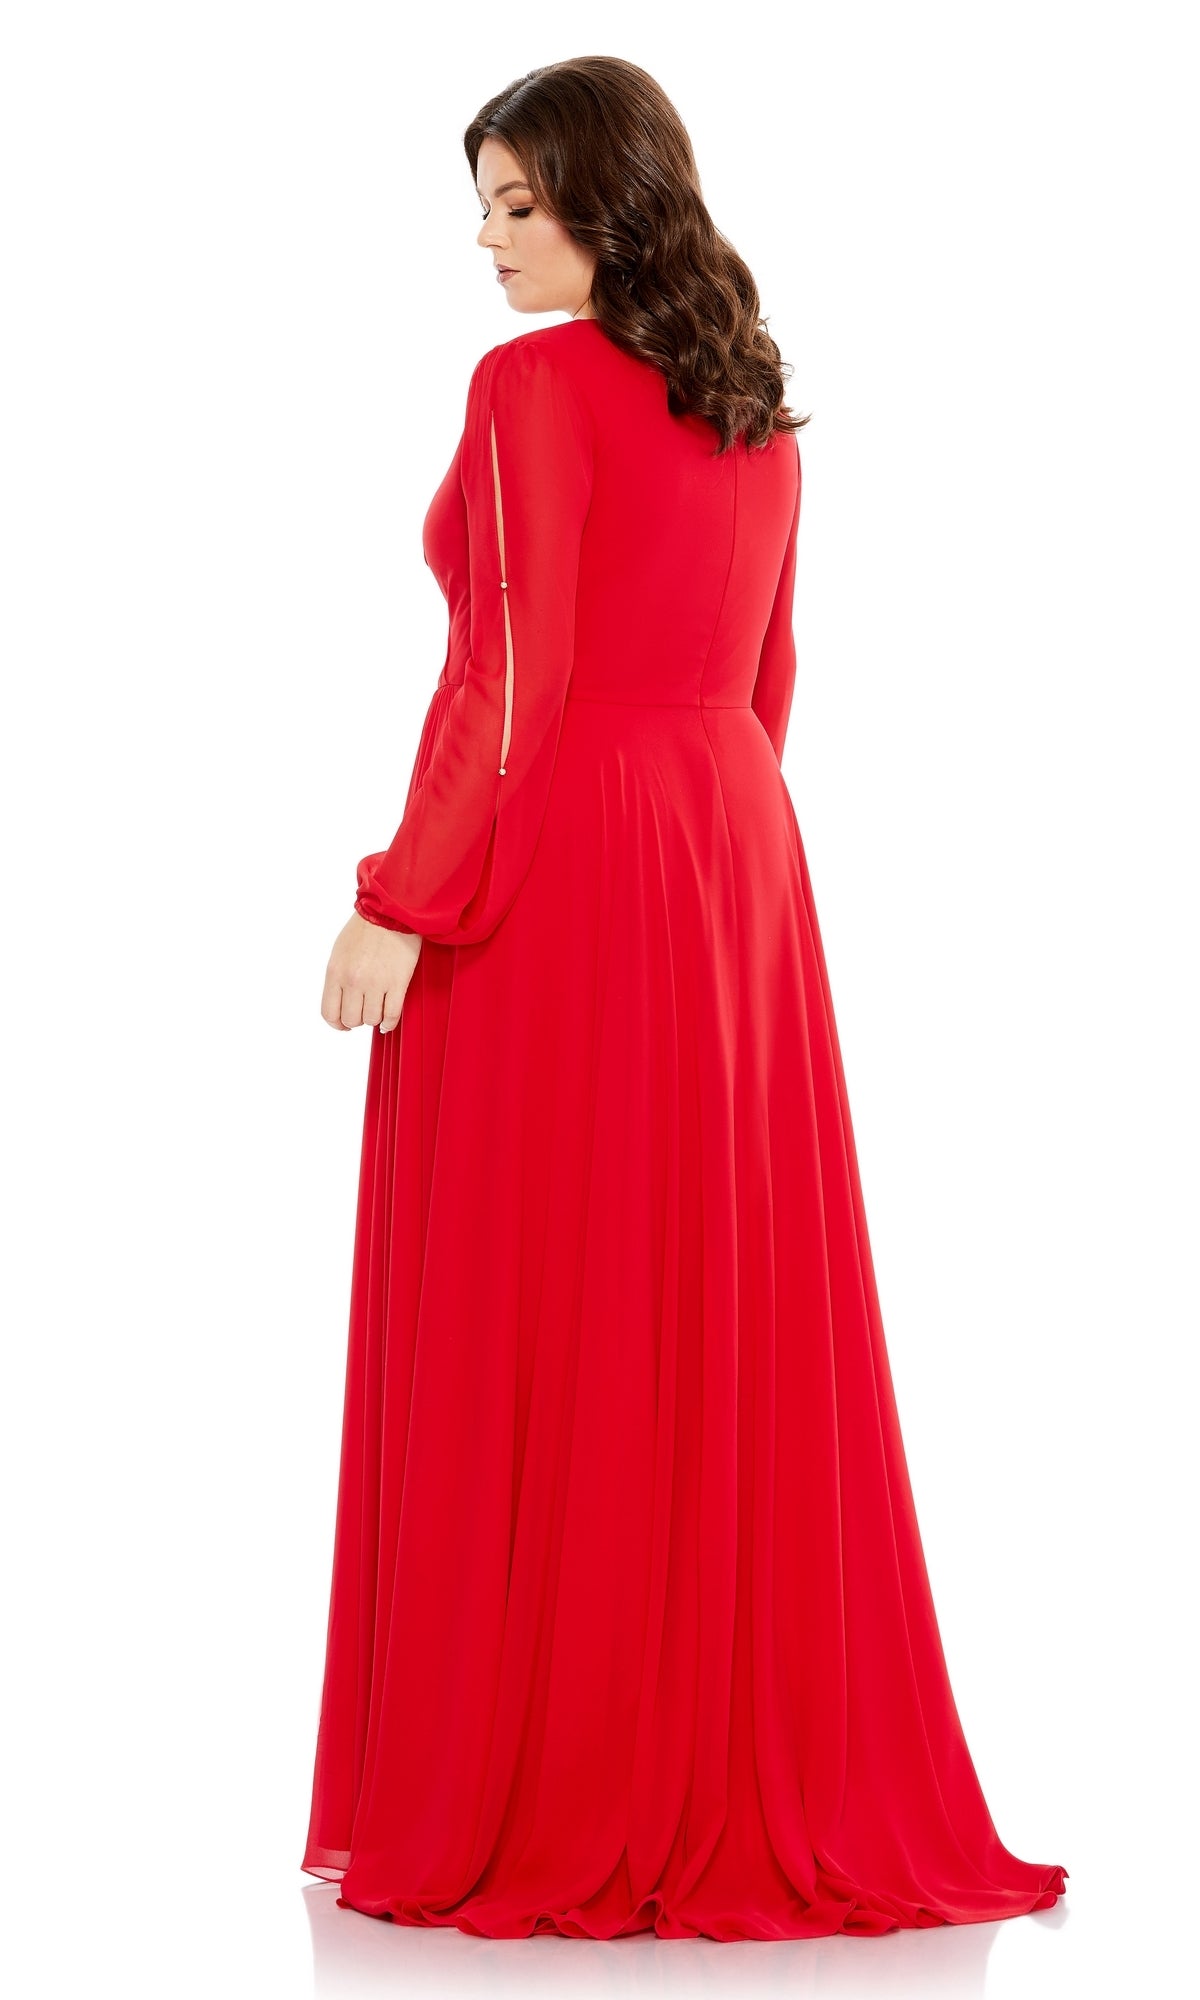 Long Plus-Size Formal Dress 67912 by Mac Duggal